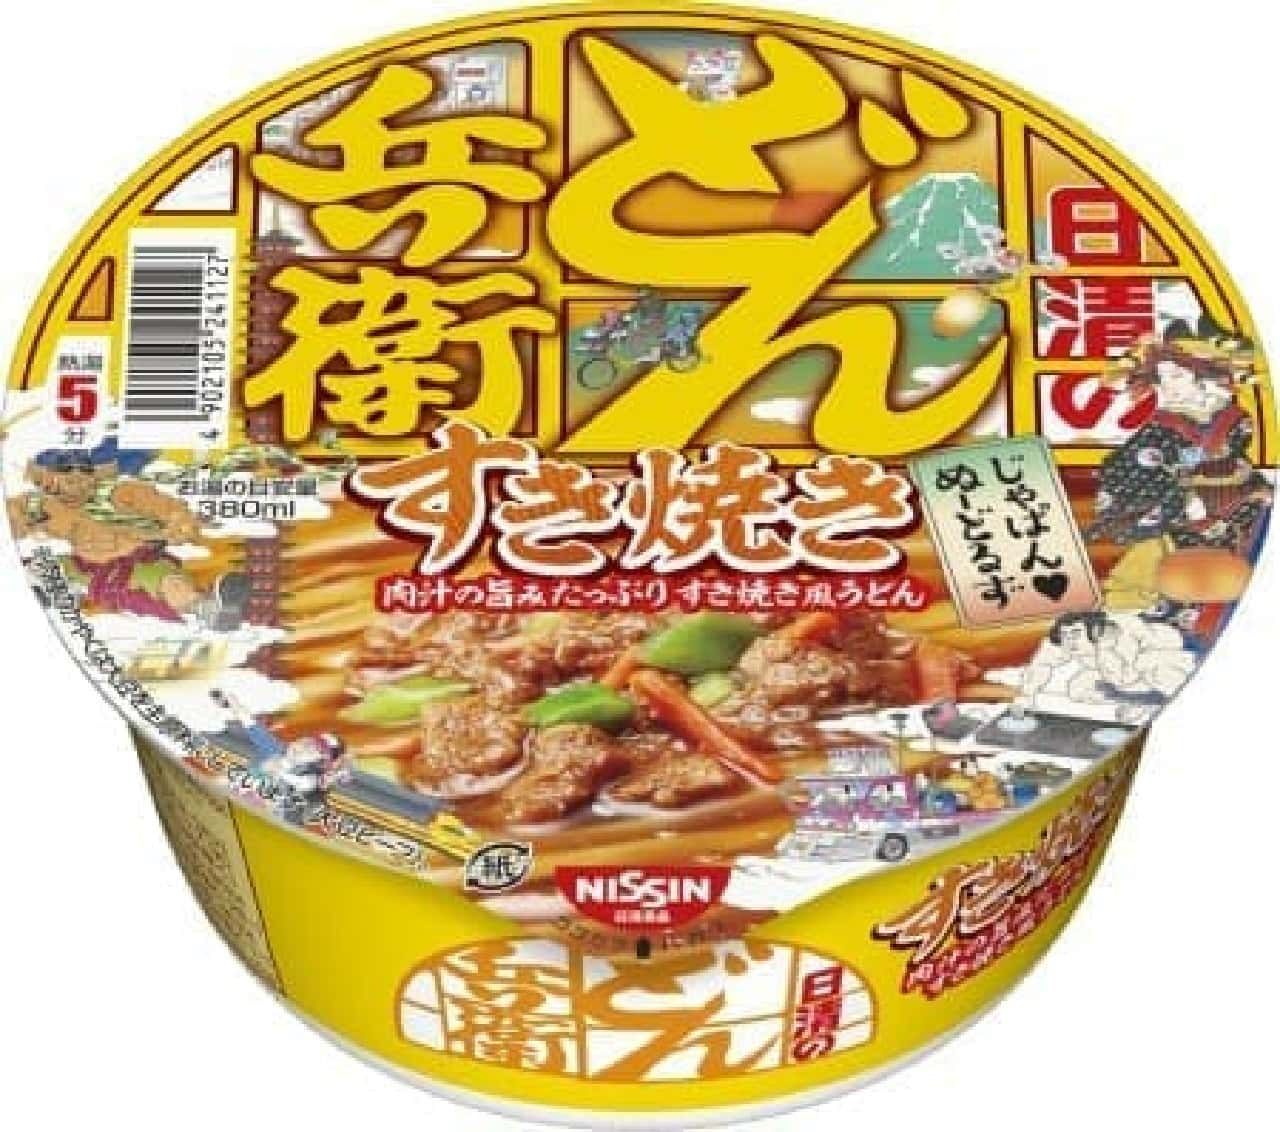 Nissin Foods "Nissin Donbei Sukiyaki Sukiyaki-style Udon with plenty of gravy"